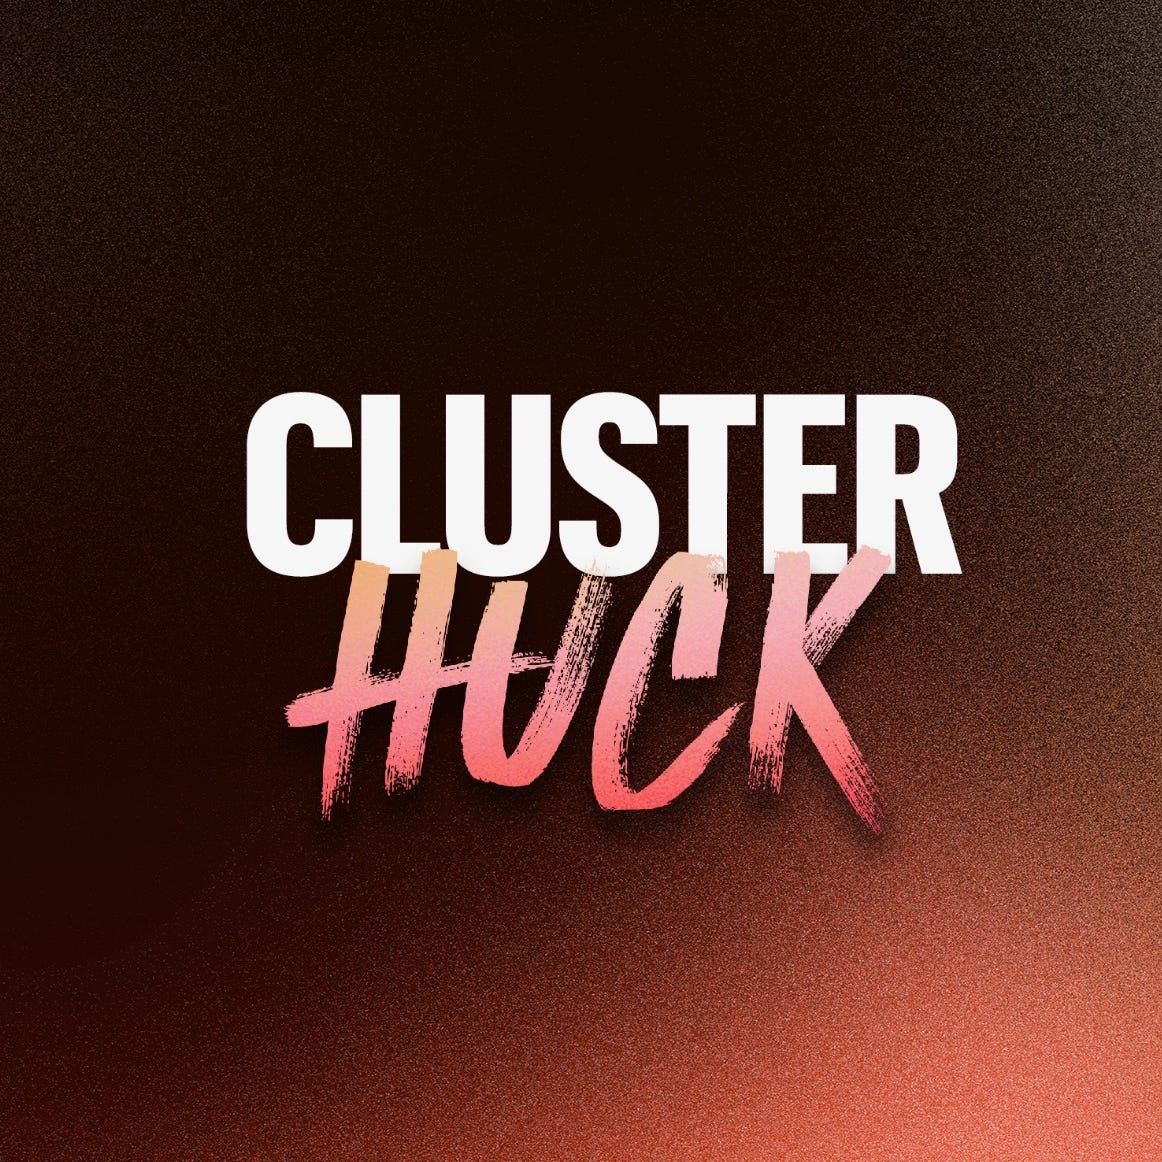 Artwork for clusterhuck